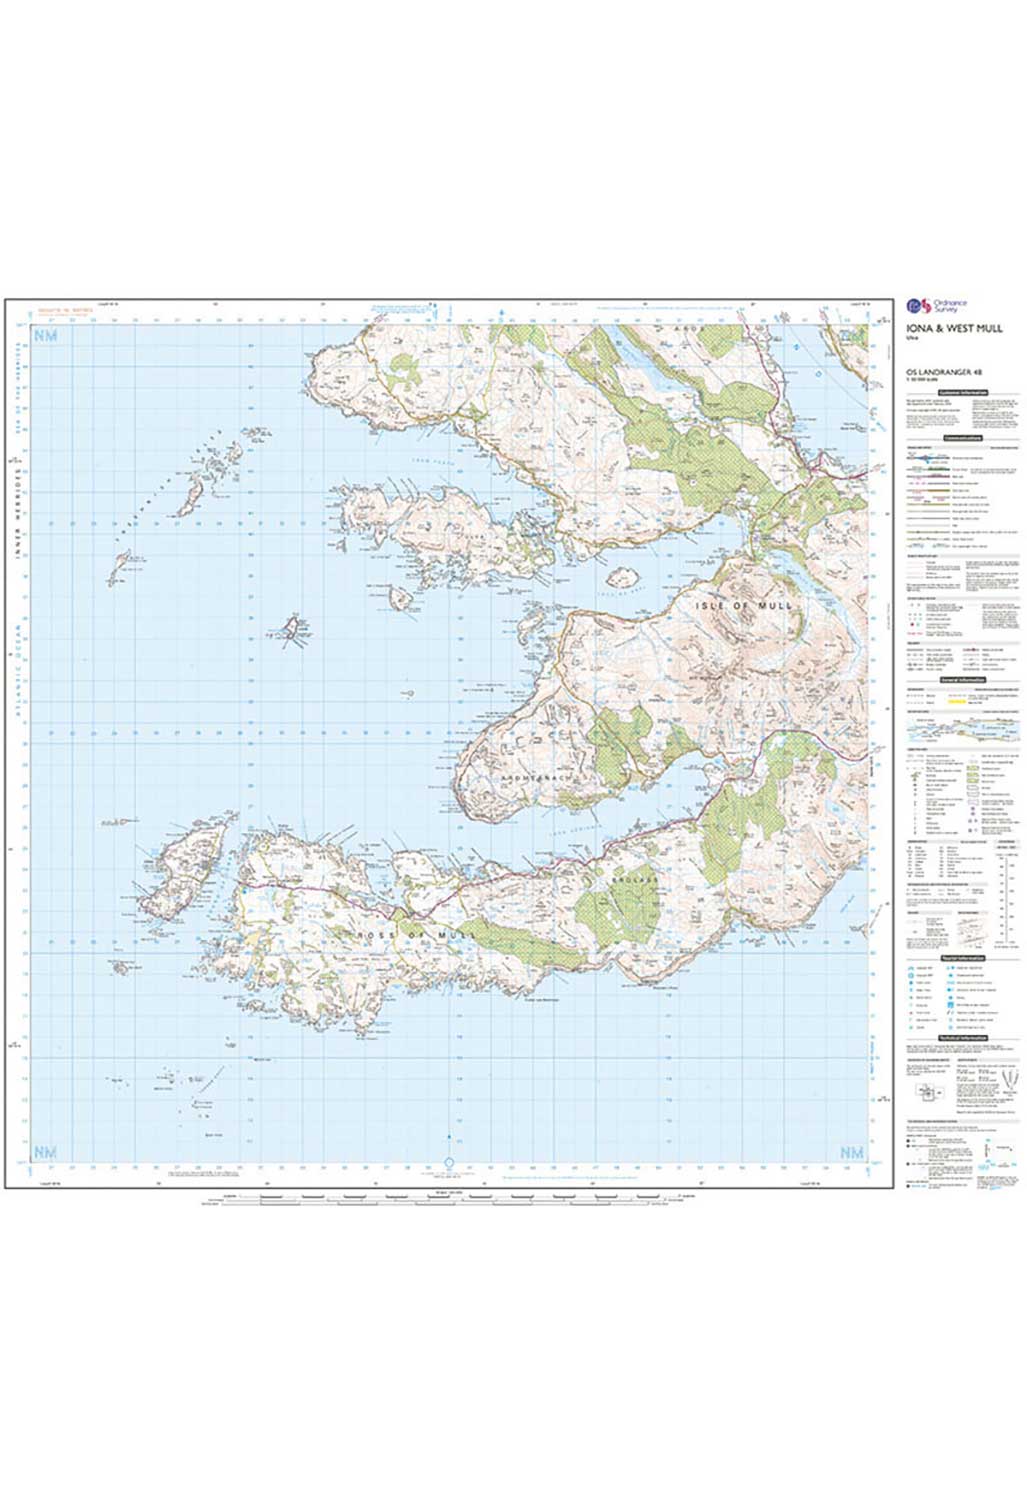 Ordnance Survey Iona & West Mull, Ulva - Landranger 48 Map